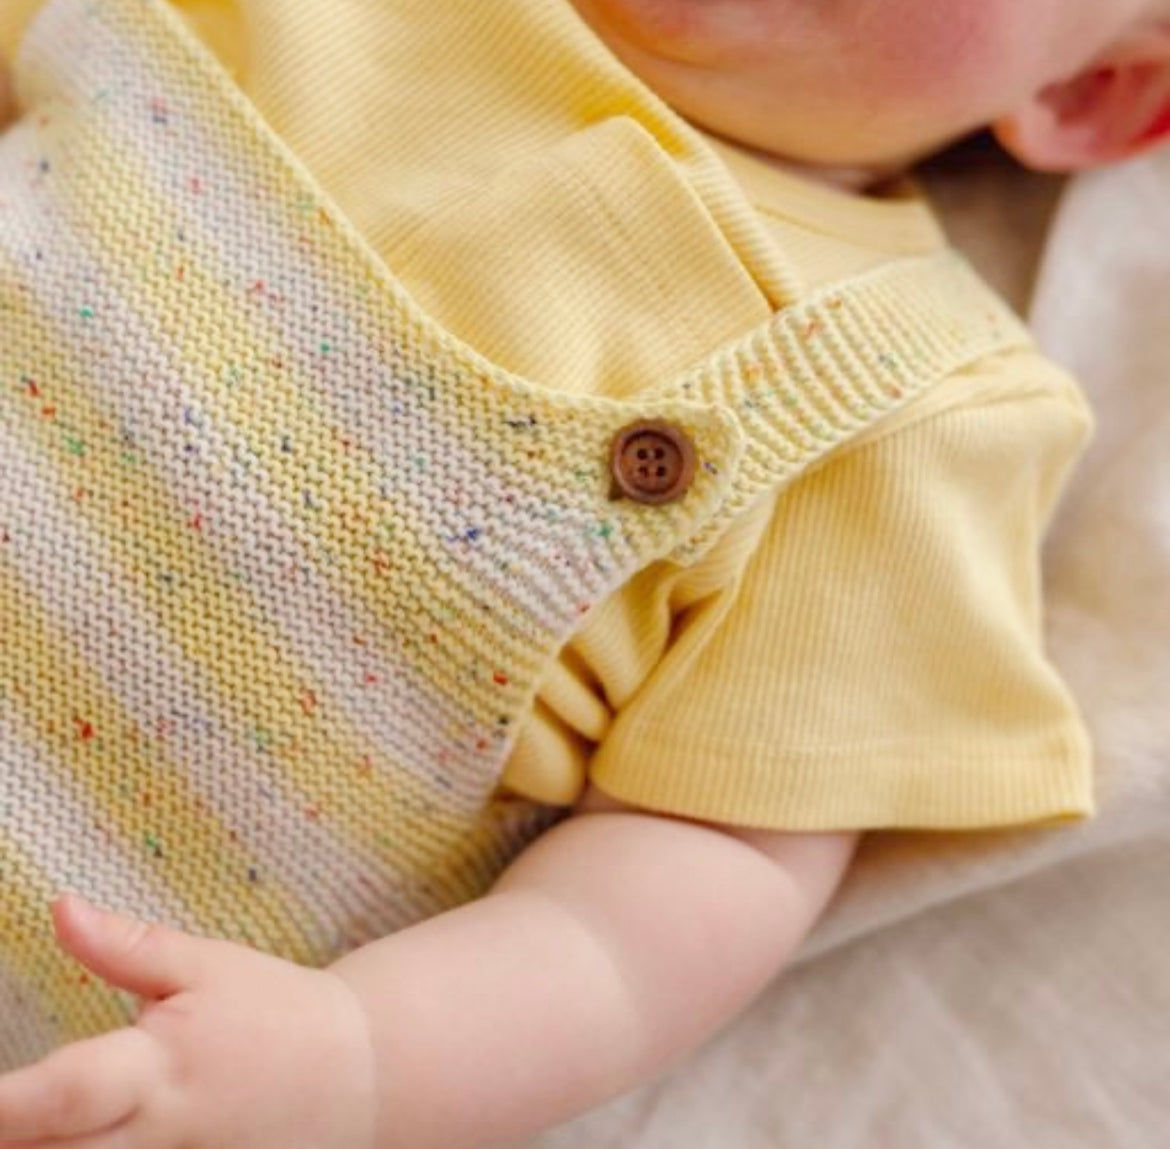 Knitted Stripe Romper - Sunshine Speckle Knit